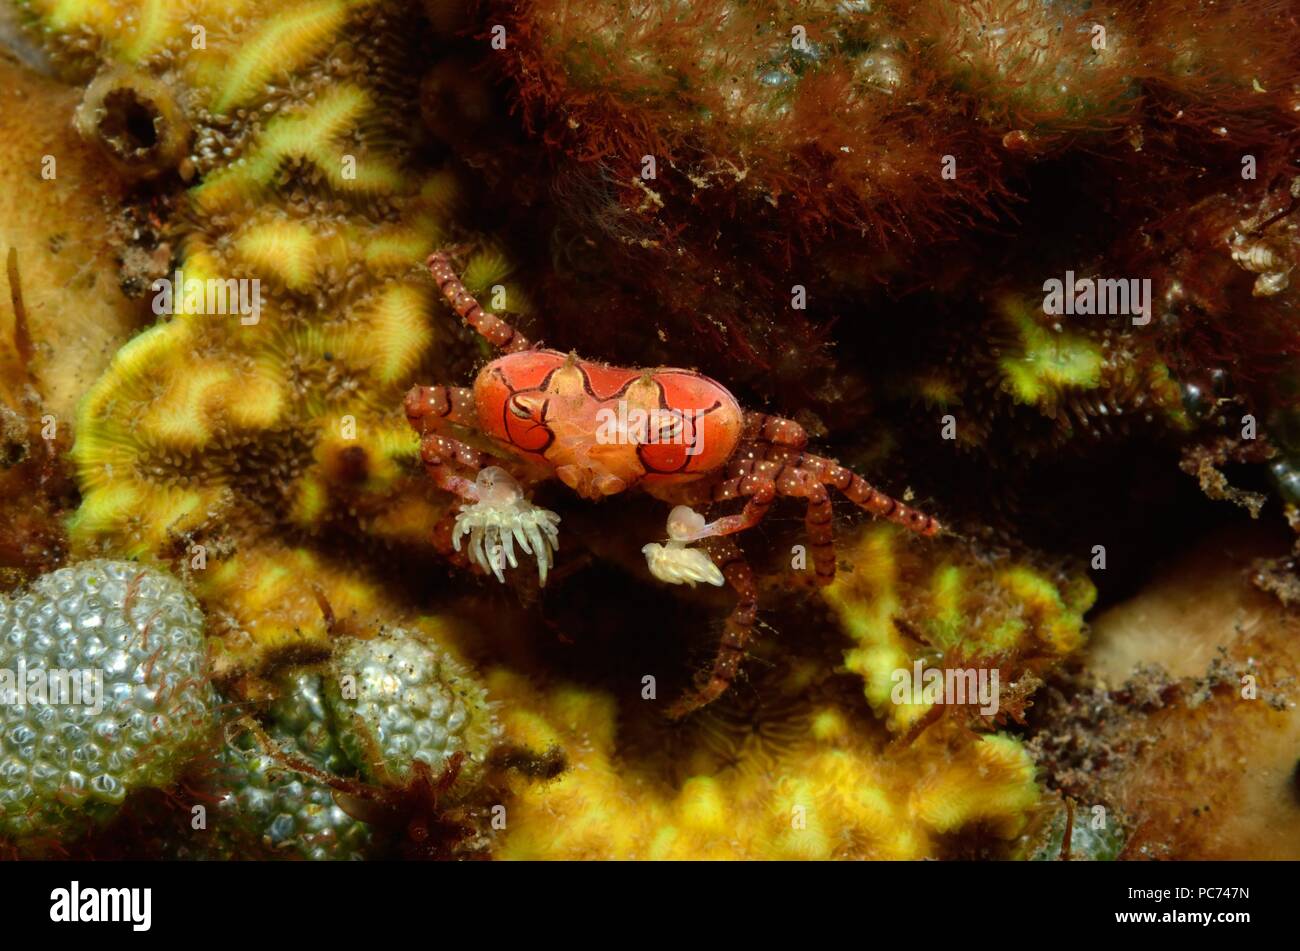 boxer or pom pom crab, Boxer-Krabbe, Lybia tesselata Stock Photo